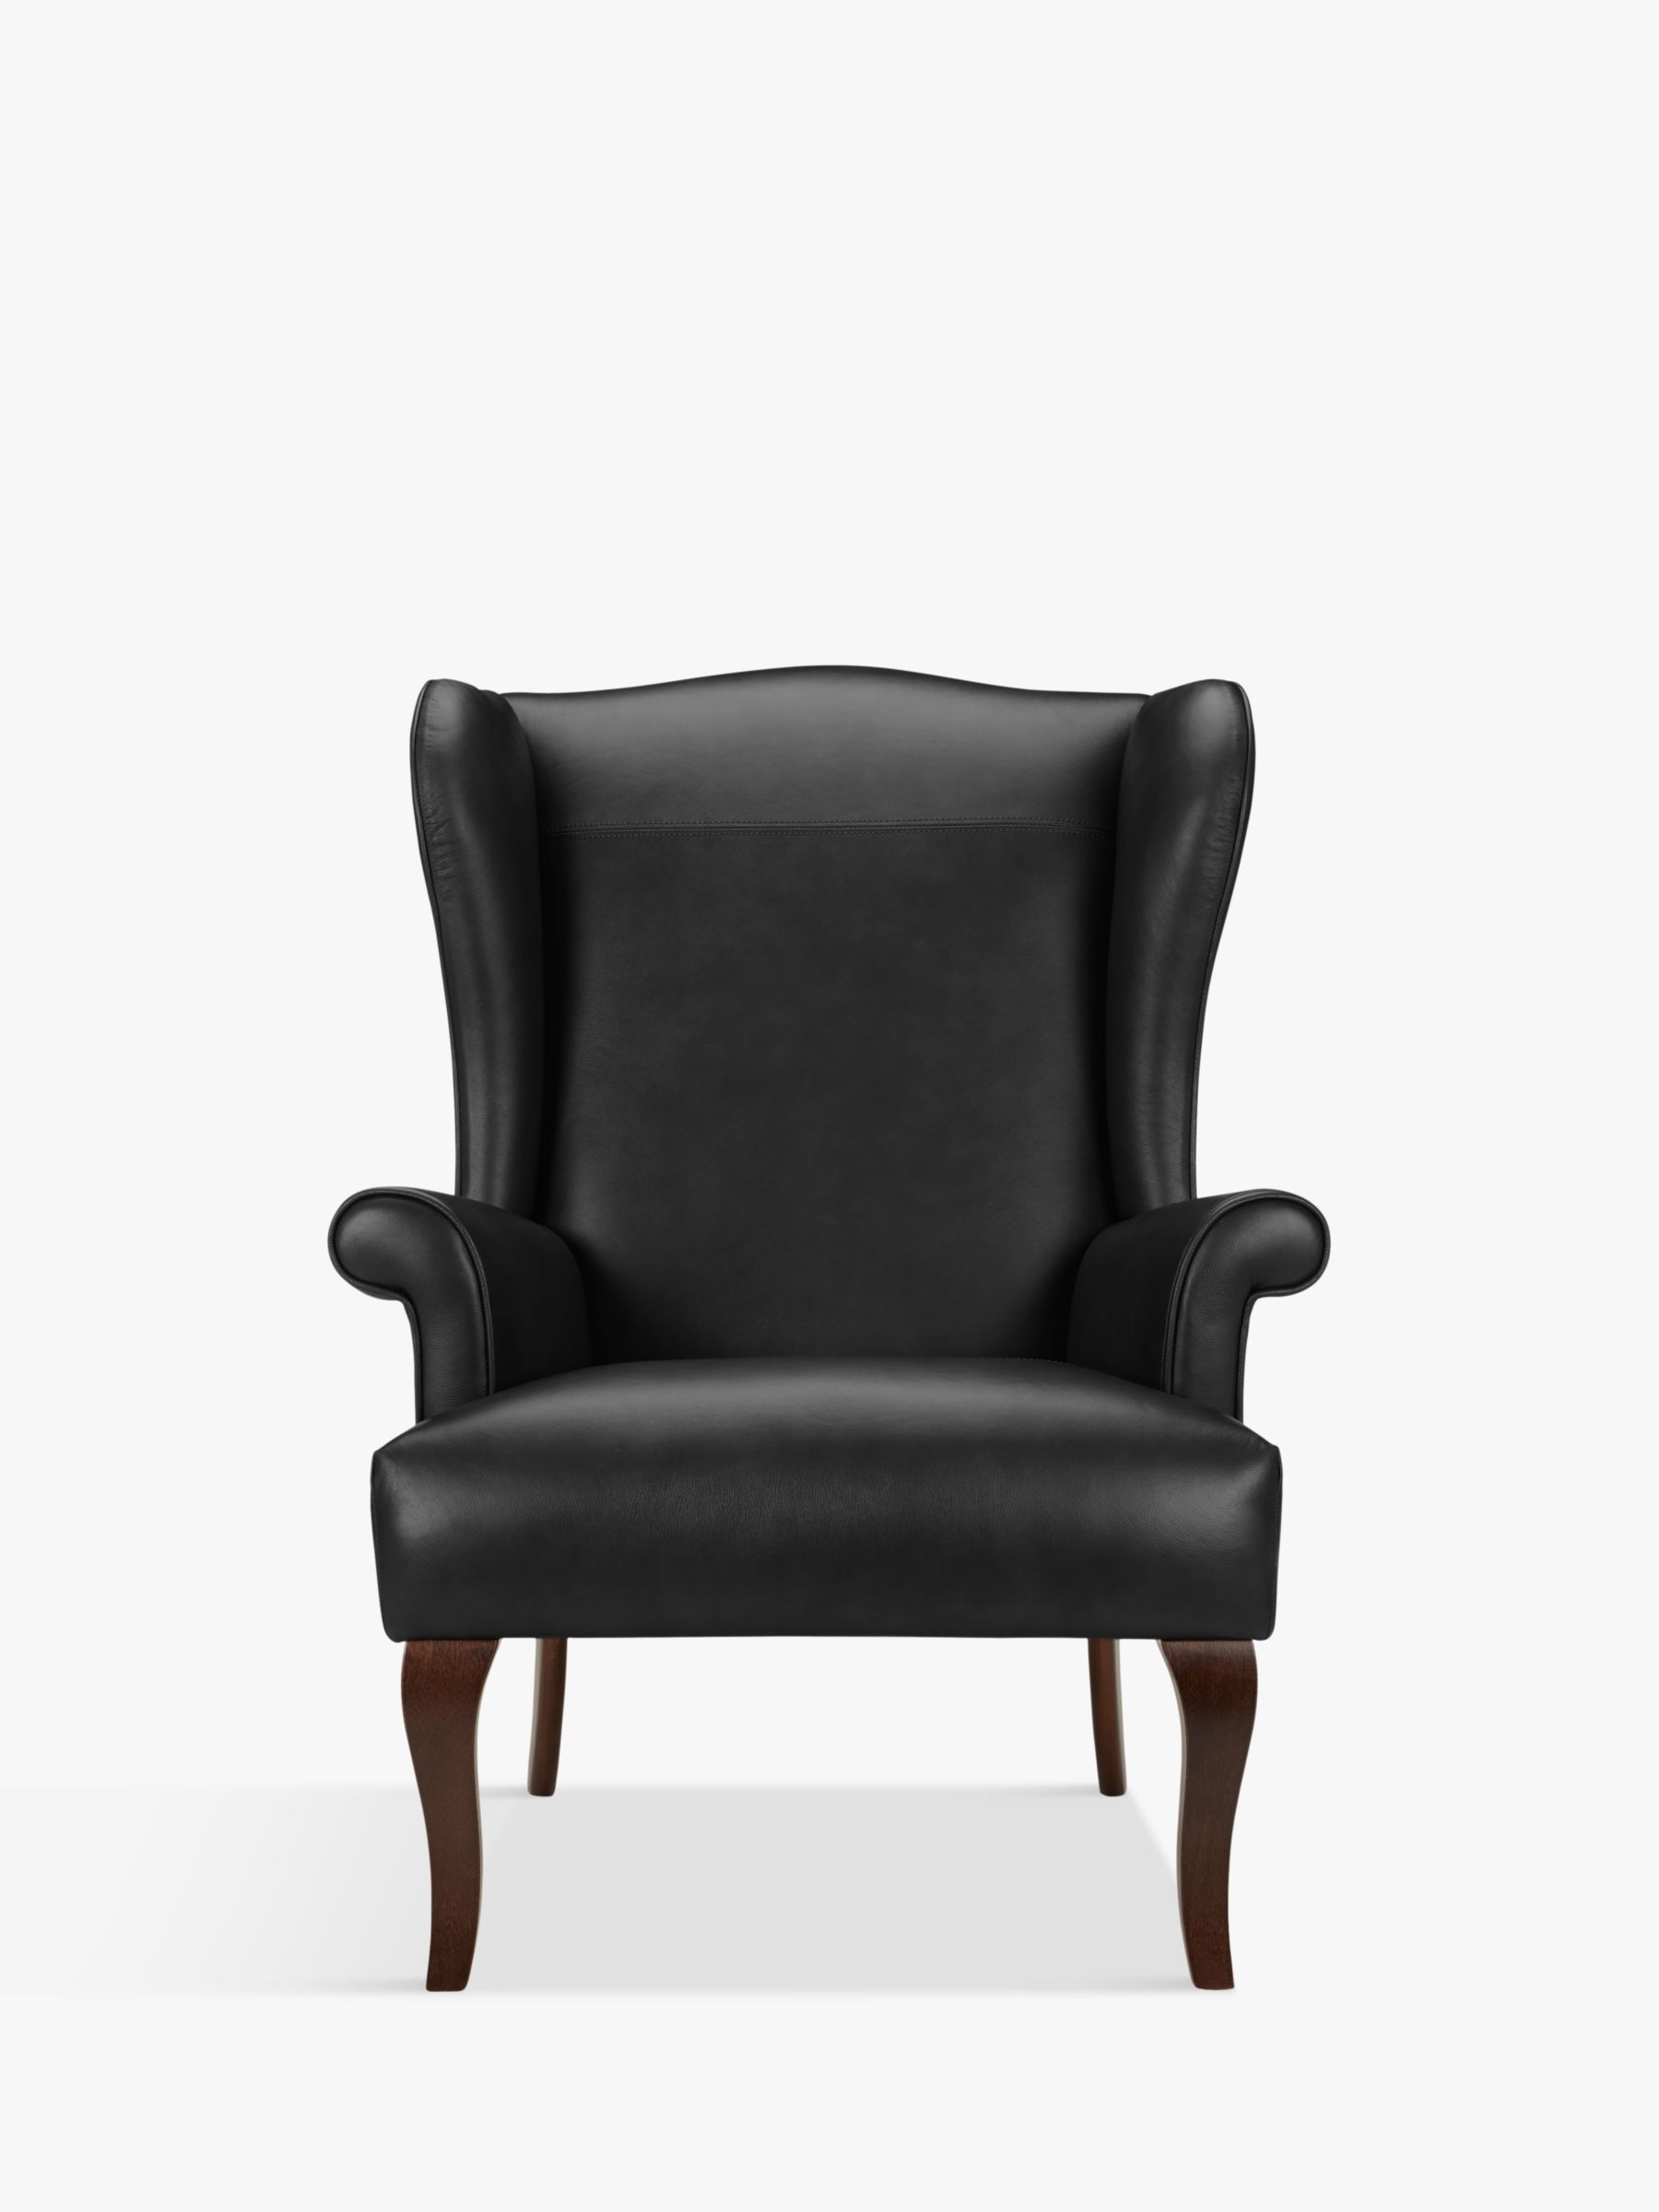 Shaftesbury Range, John Lewis Shaftesbury Leather Wing Chair, Dark Leg, Contempo Black